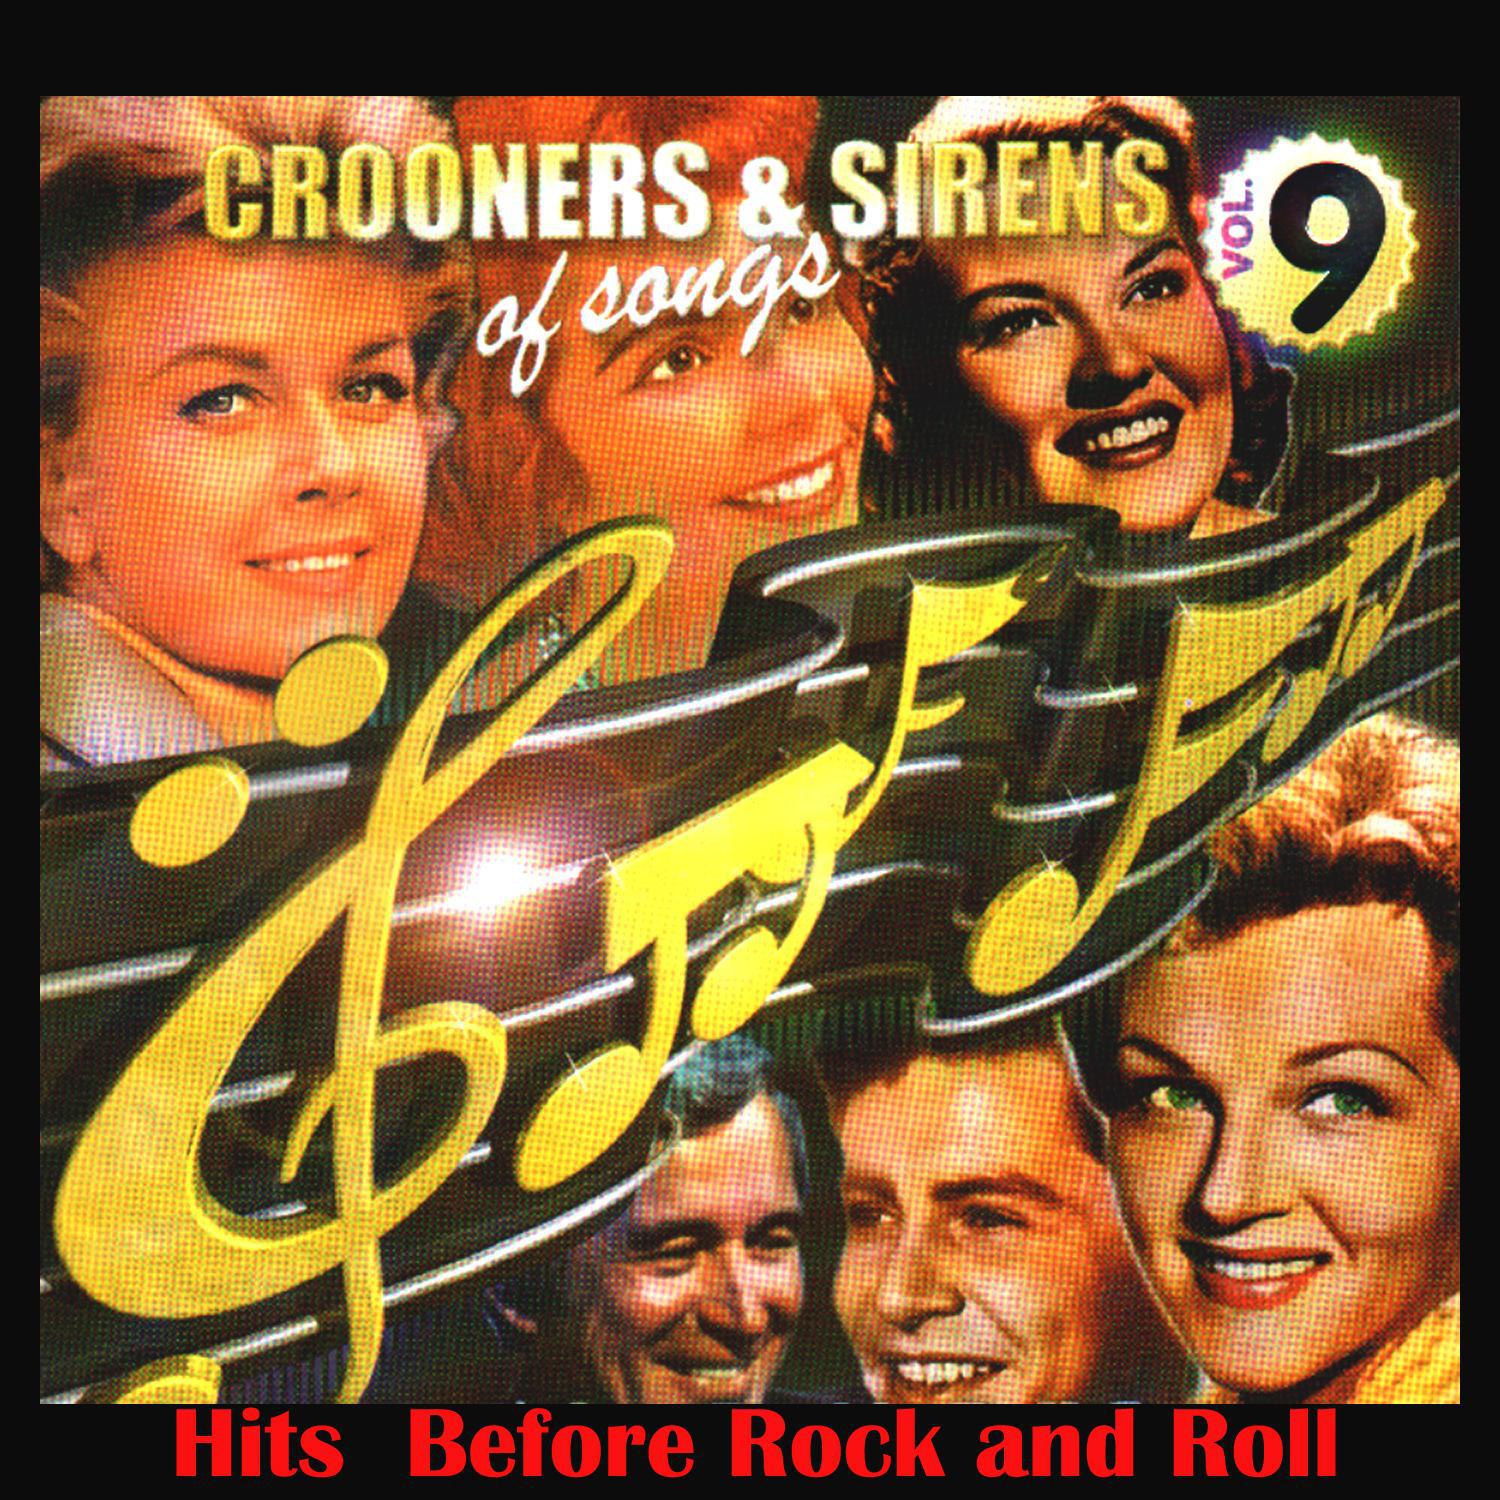 Crooners and Sirens of Songs Vol. 9 Hits Before Rock n Roll